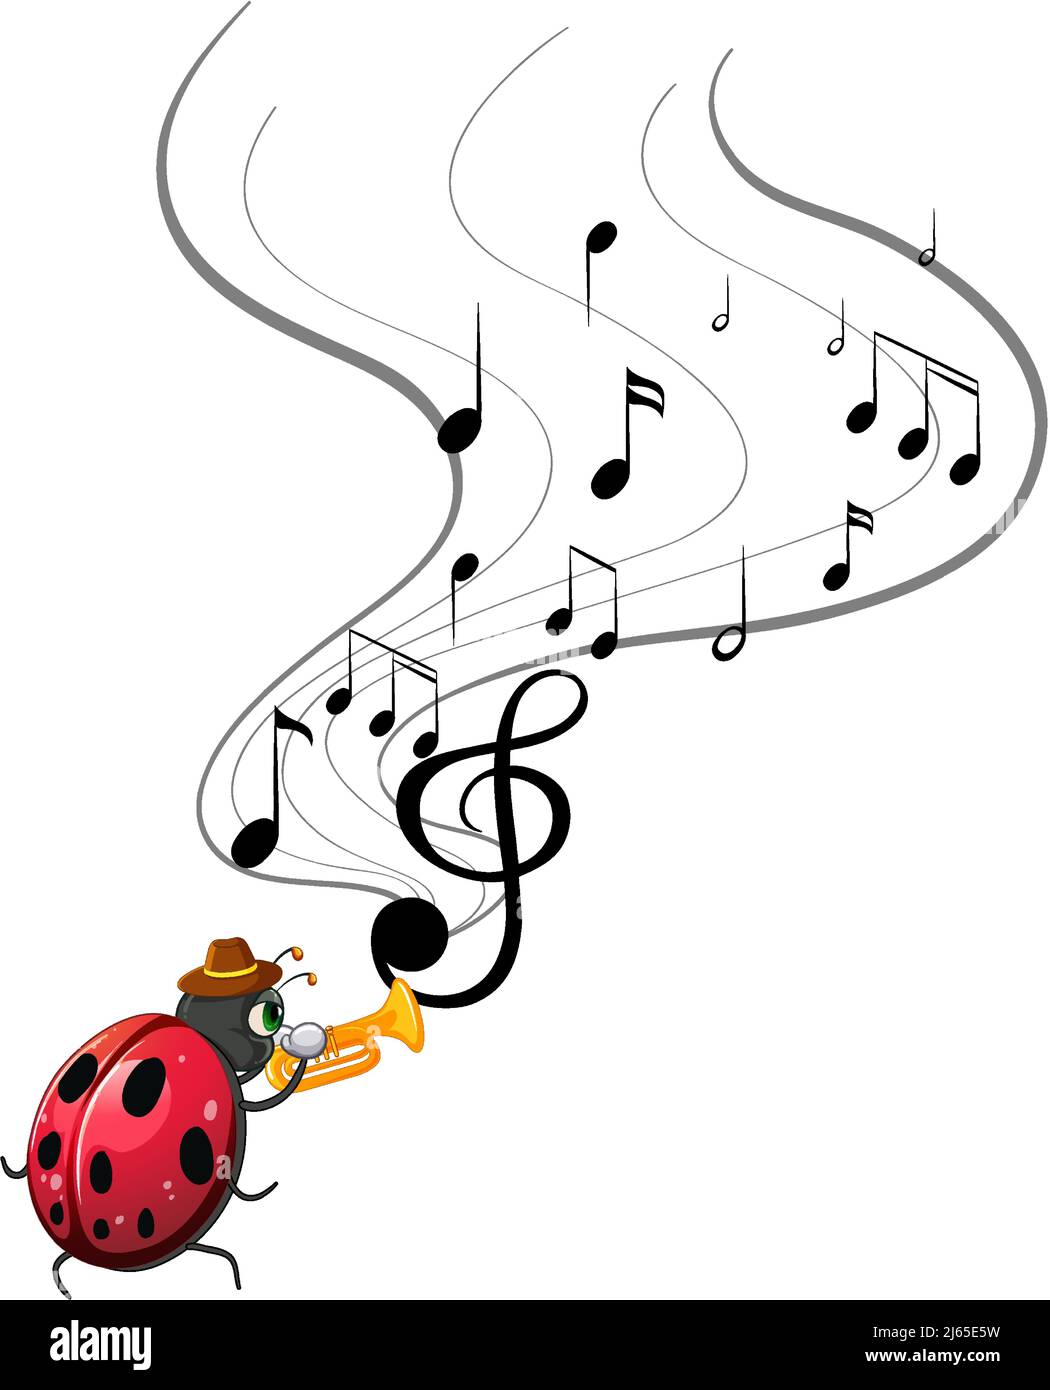 Ilustración de dibujos animados con símbolo de melodía musical Imagen  Vector de stock - Alamy